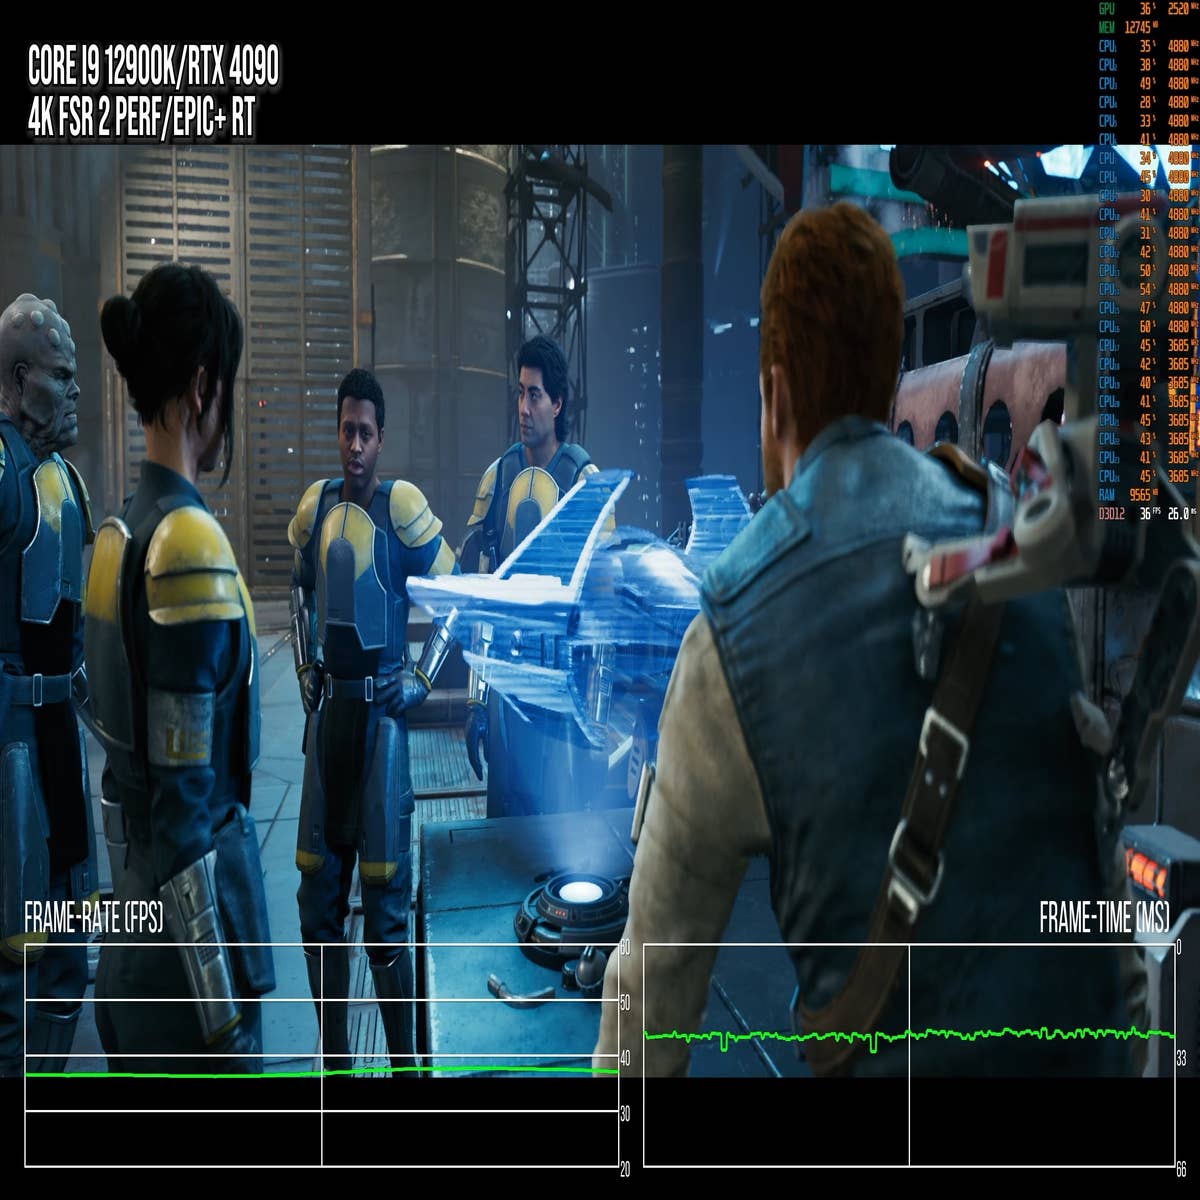 NV99, Veja os requisitos de hardware de Star Wars Jedi Survivor no PC, Flow Games